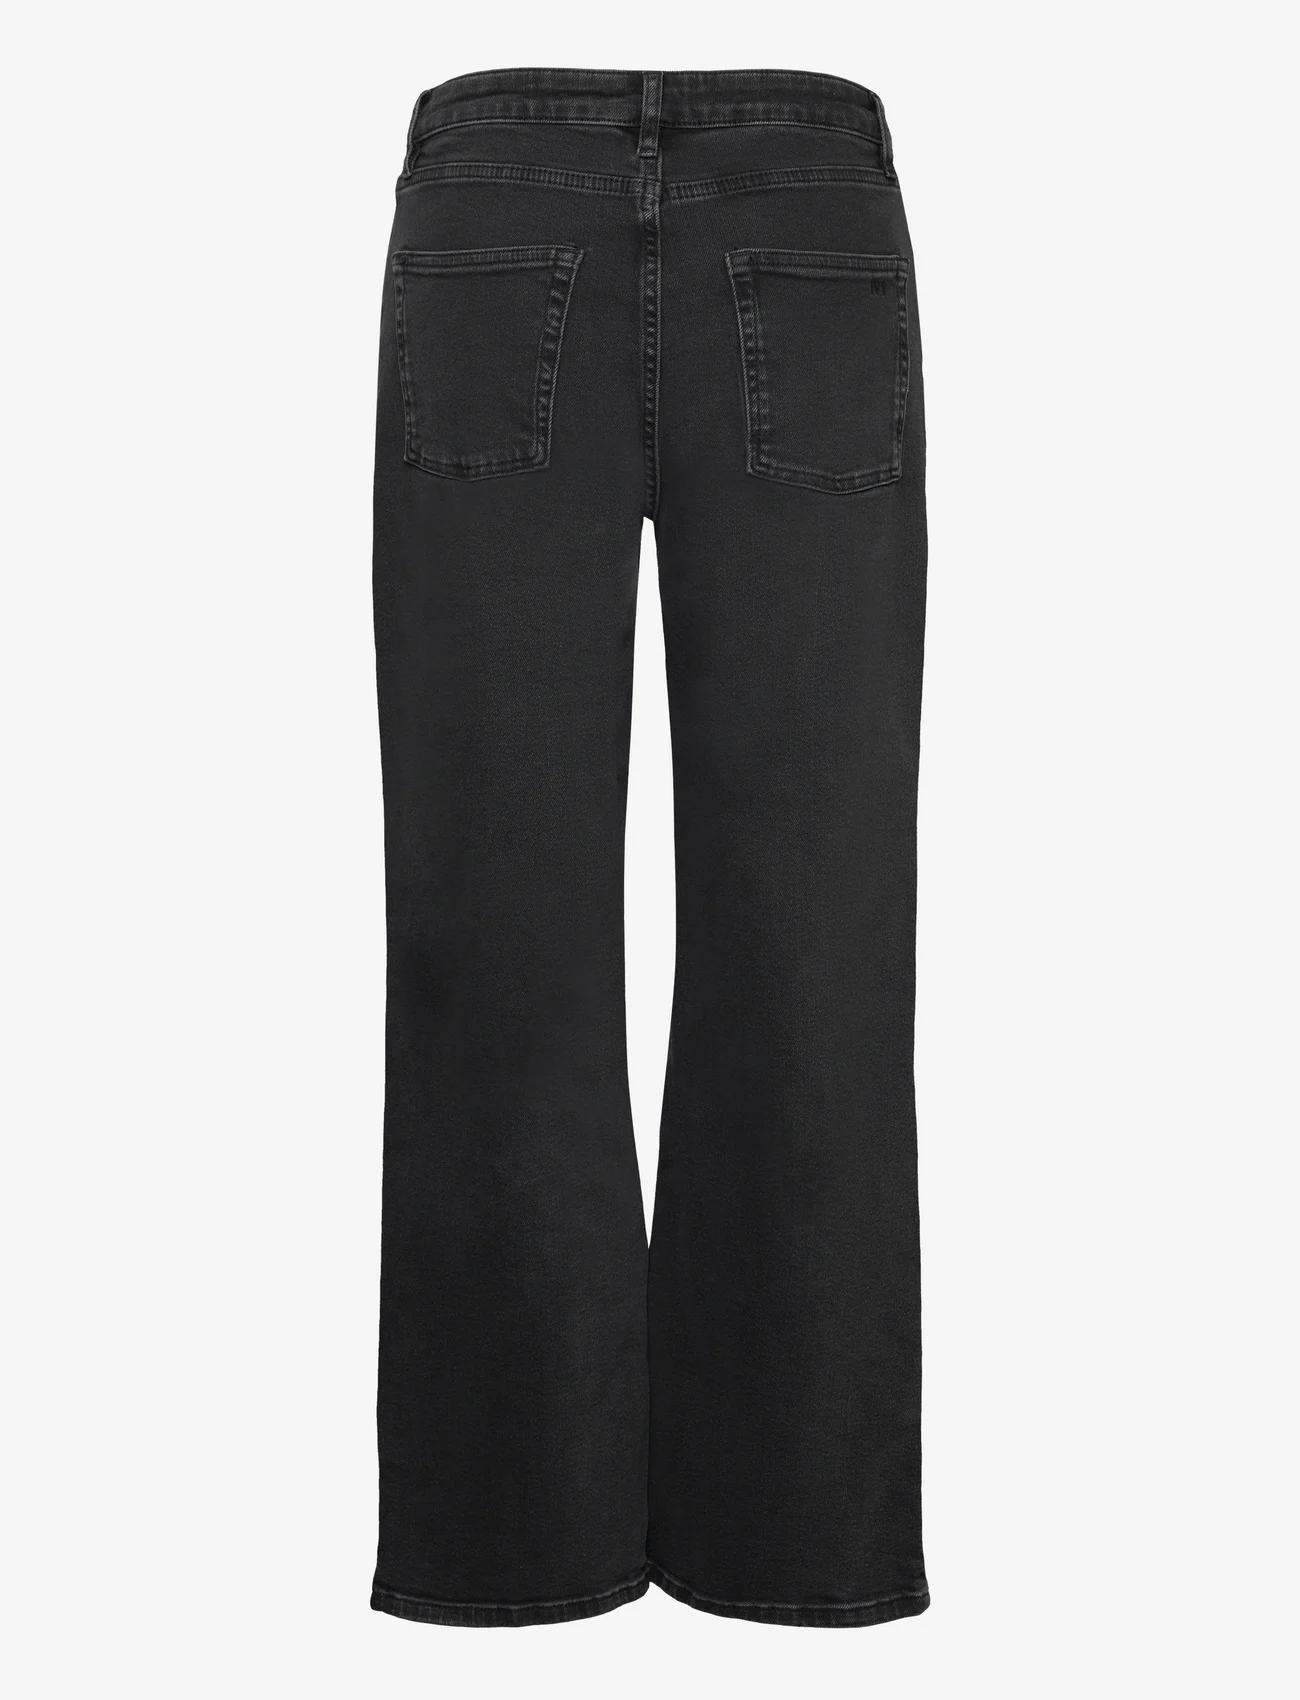 IVY Copenhagen - IVY-Brooke Jeans Wash Original Blac - leveälahkeiset farkut - black - 1